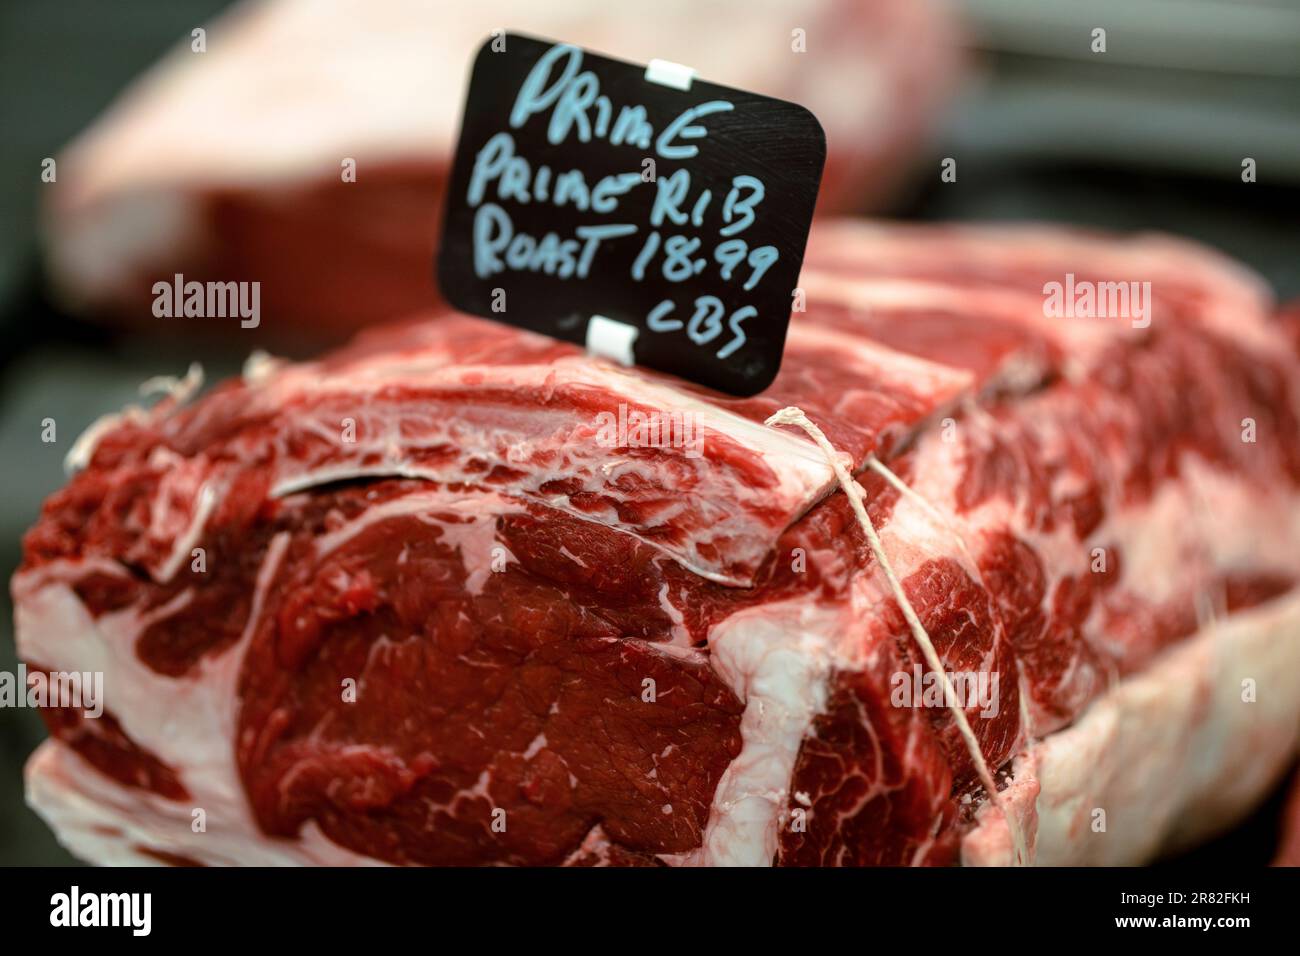 Meat Prices Canada, Prime Rib Roast Price Stock Photo